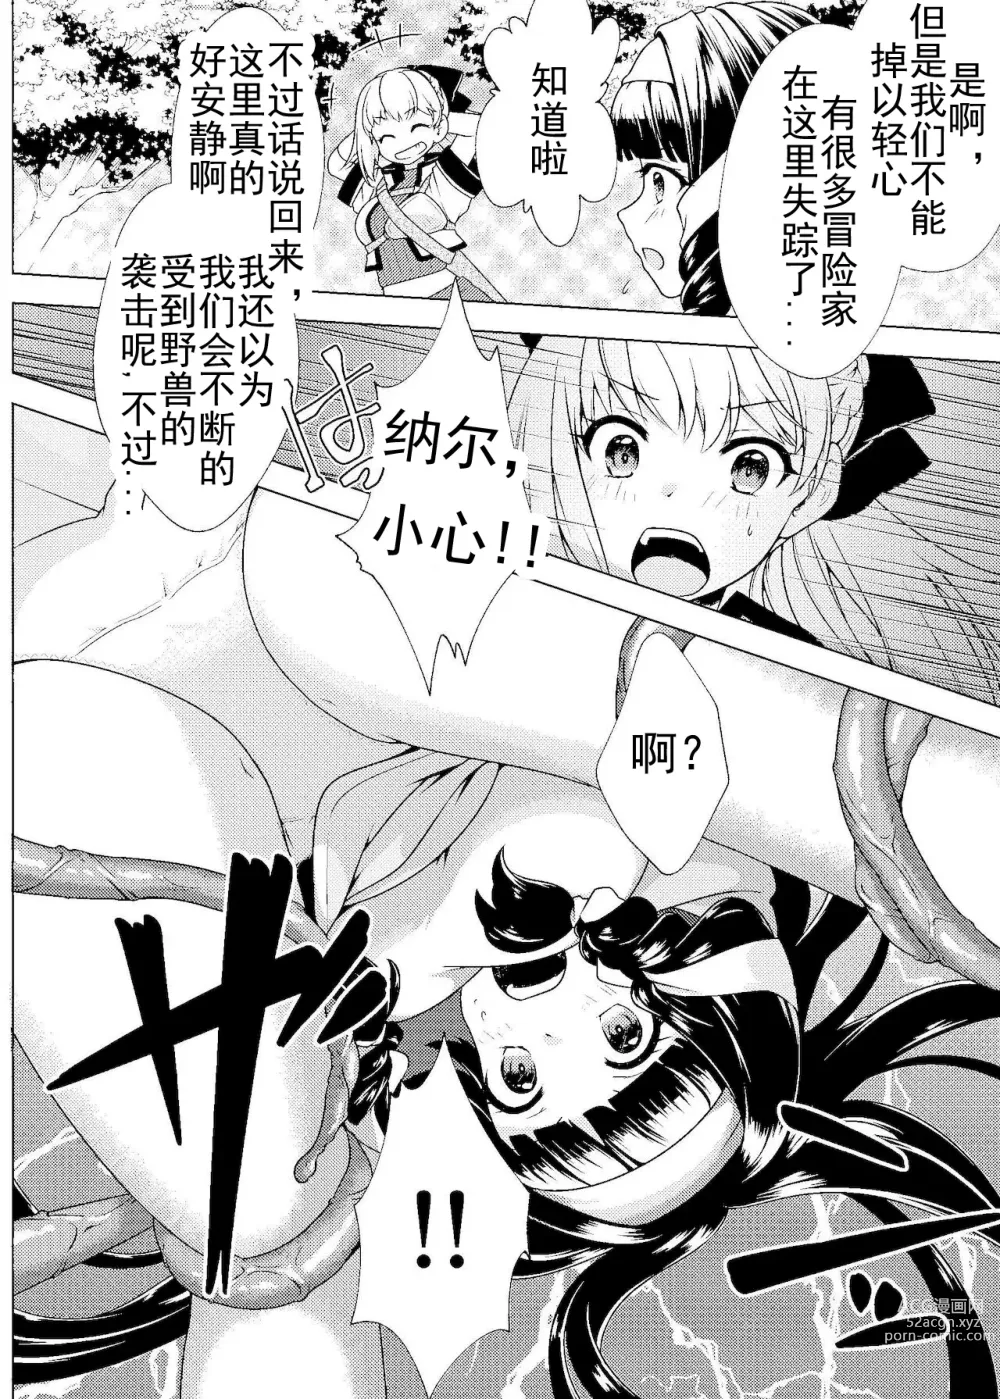 Page 3 of manga Nakayoshi Boukensha no Marunomi Haiboku End